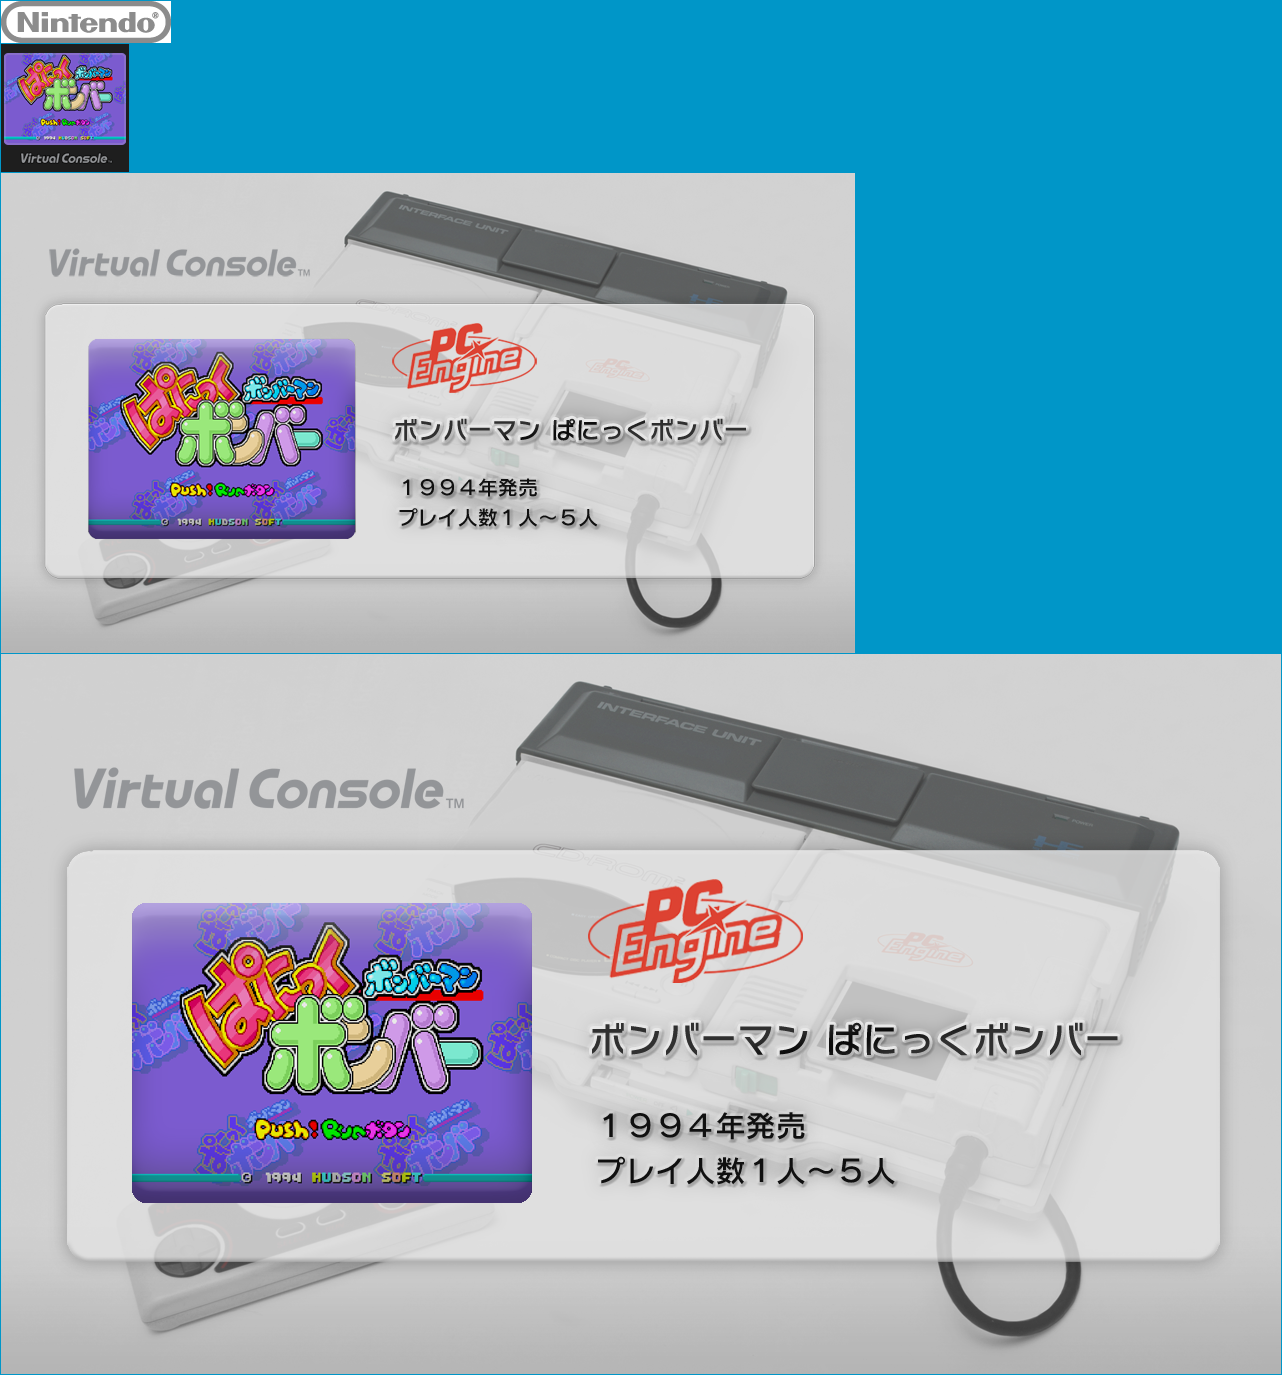 Virtual Console - Bomberman: Panic Bomber